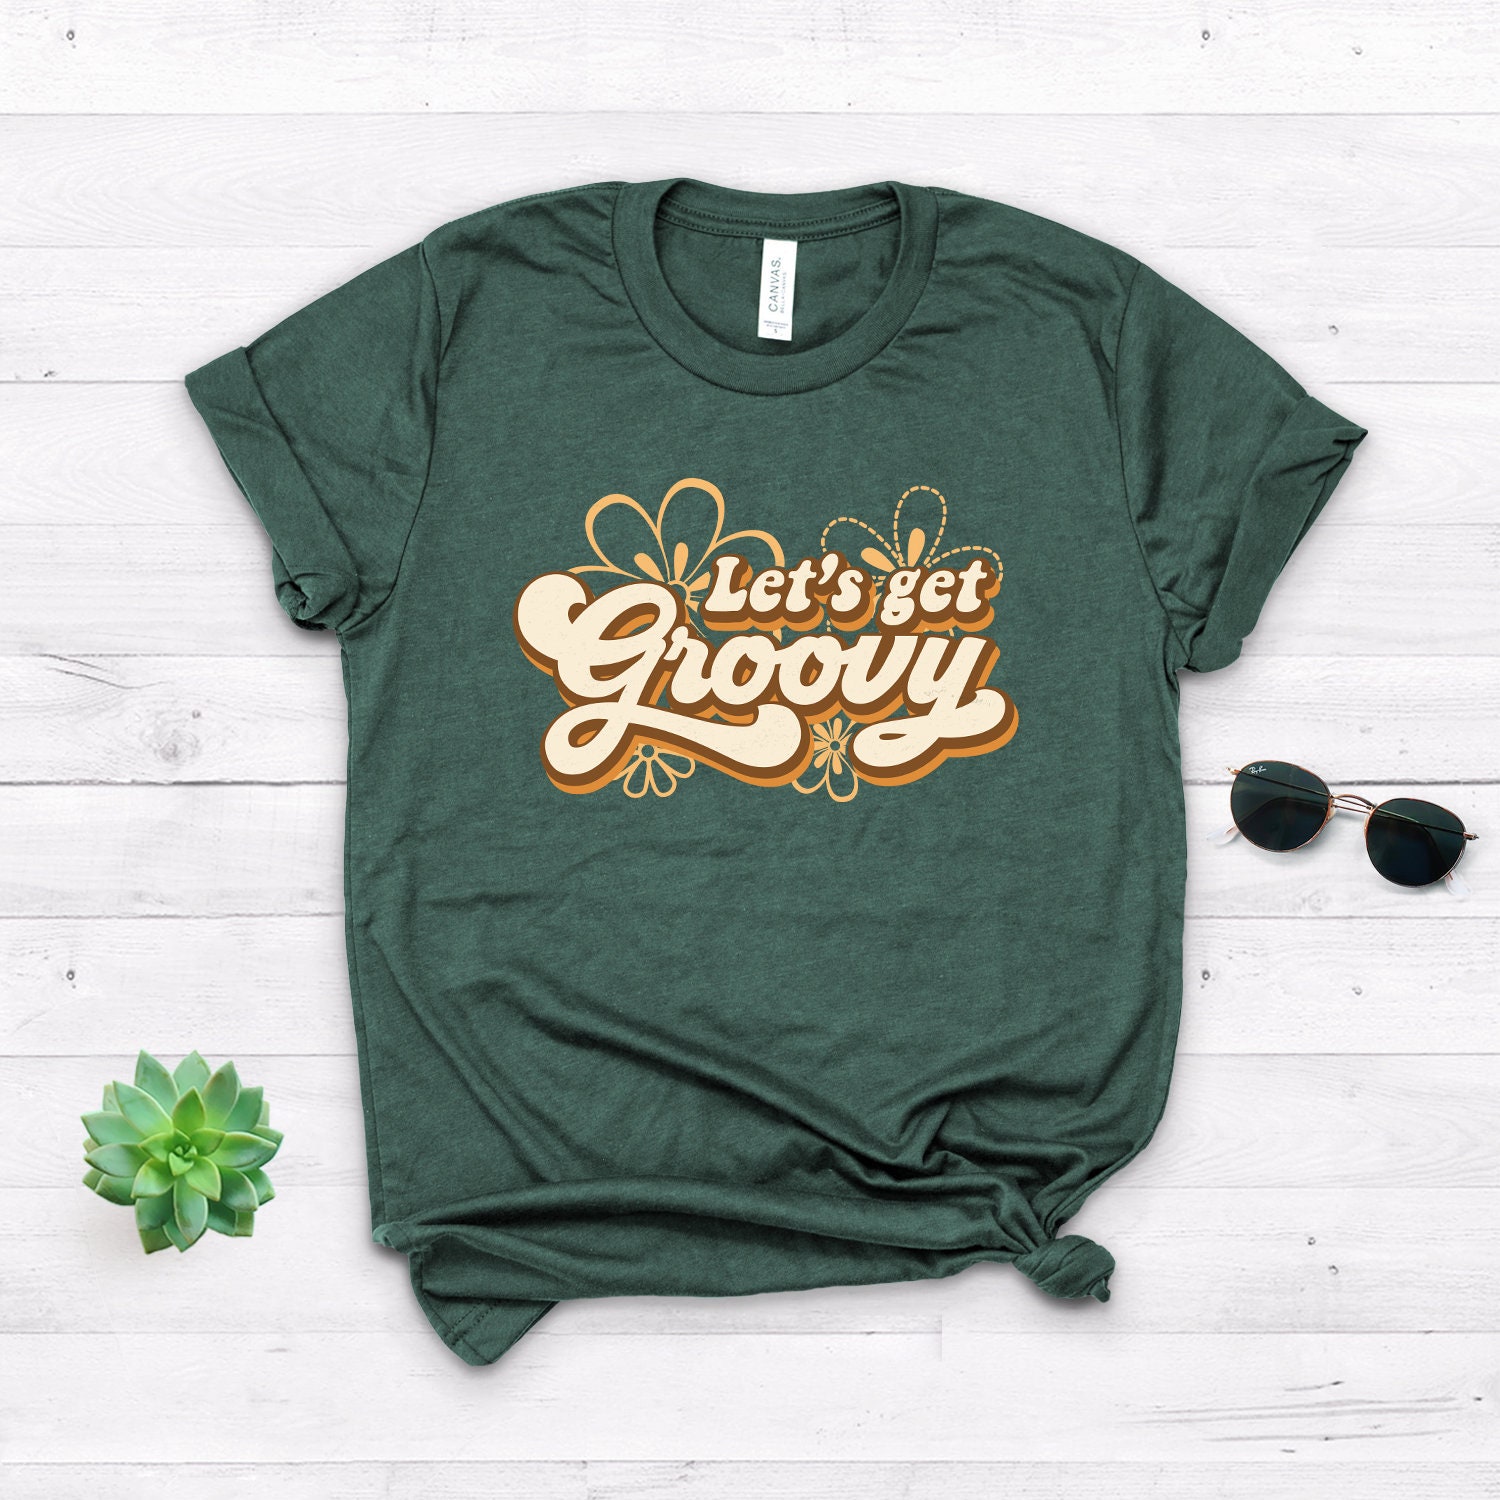 70s Clothing Retro Shirt 70s Shirt Hippie Shirt Groovy | Etsy